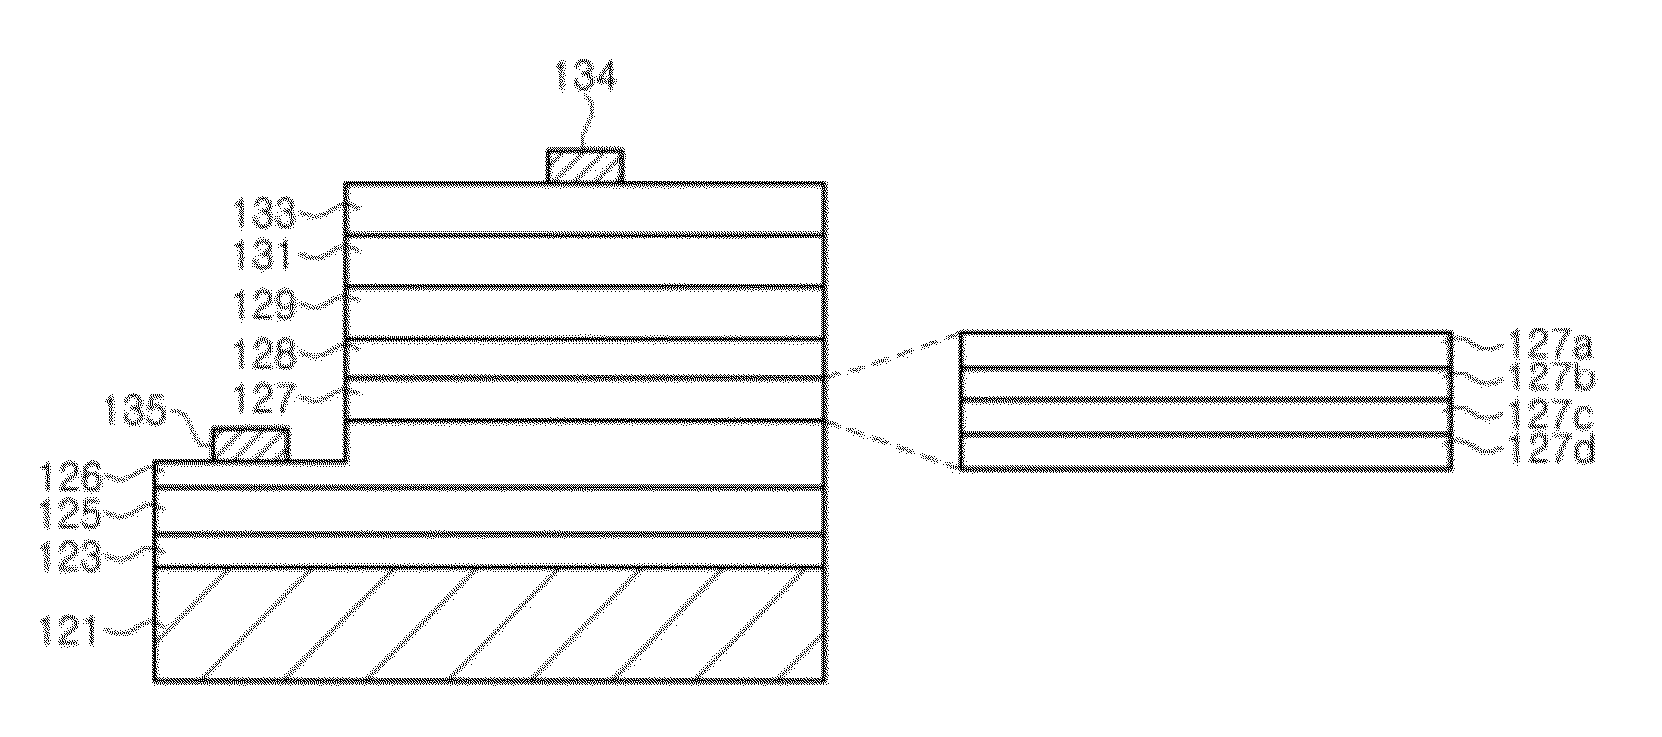 Light emitting diode and method of fabricating the same